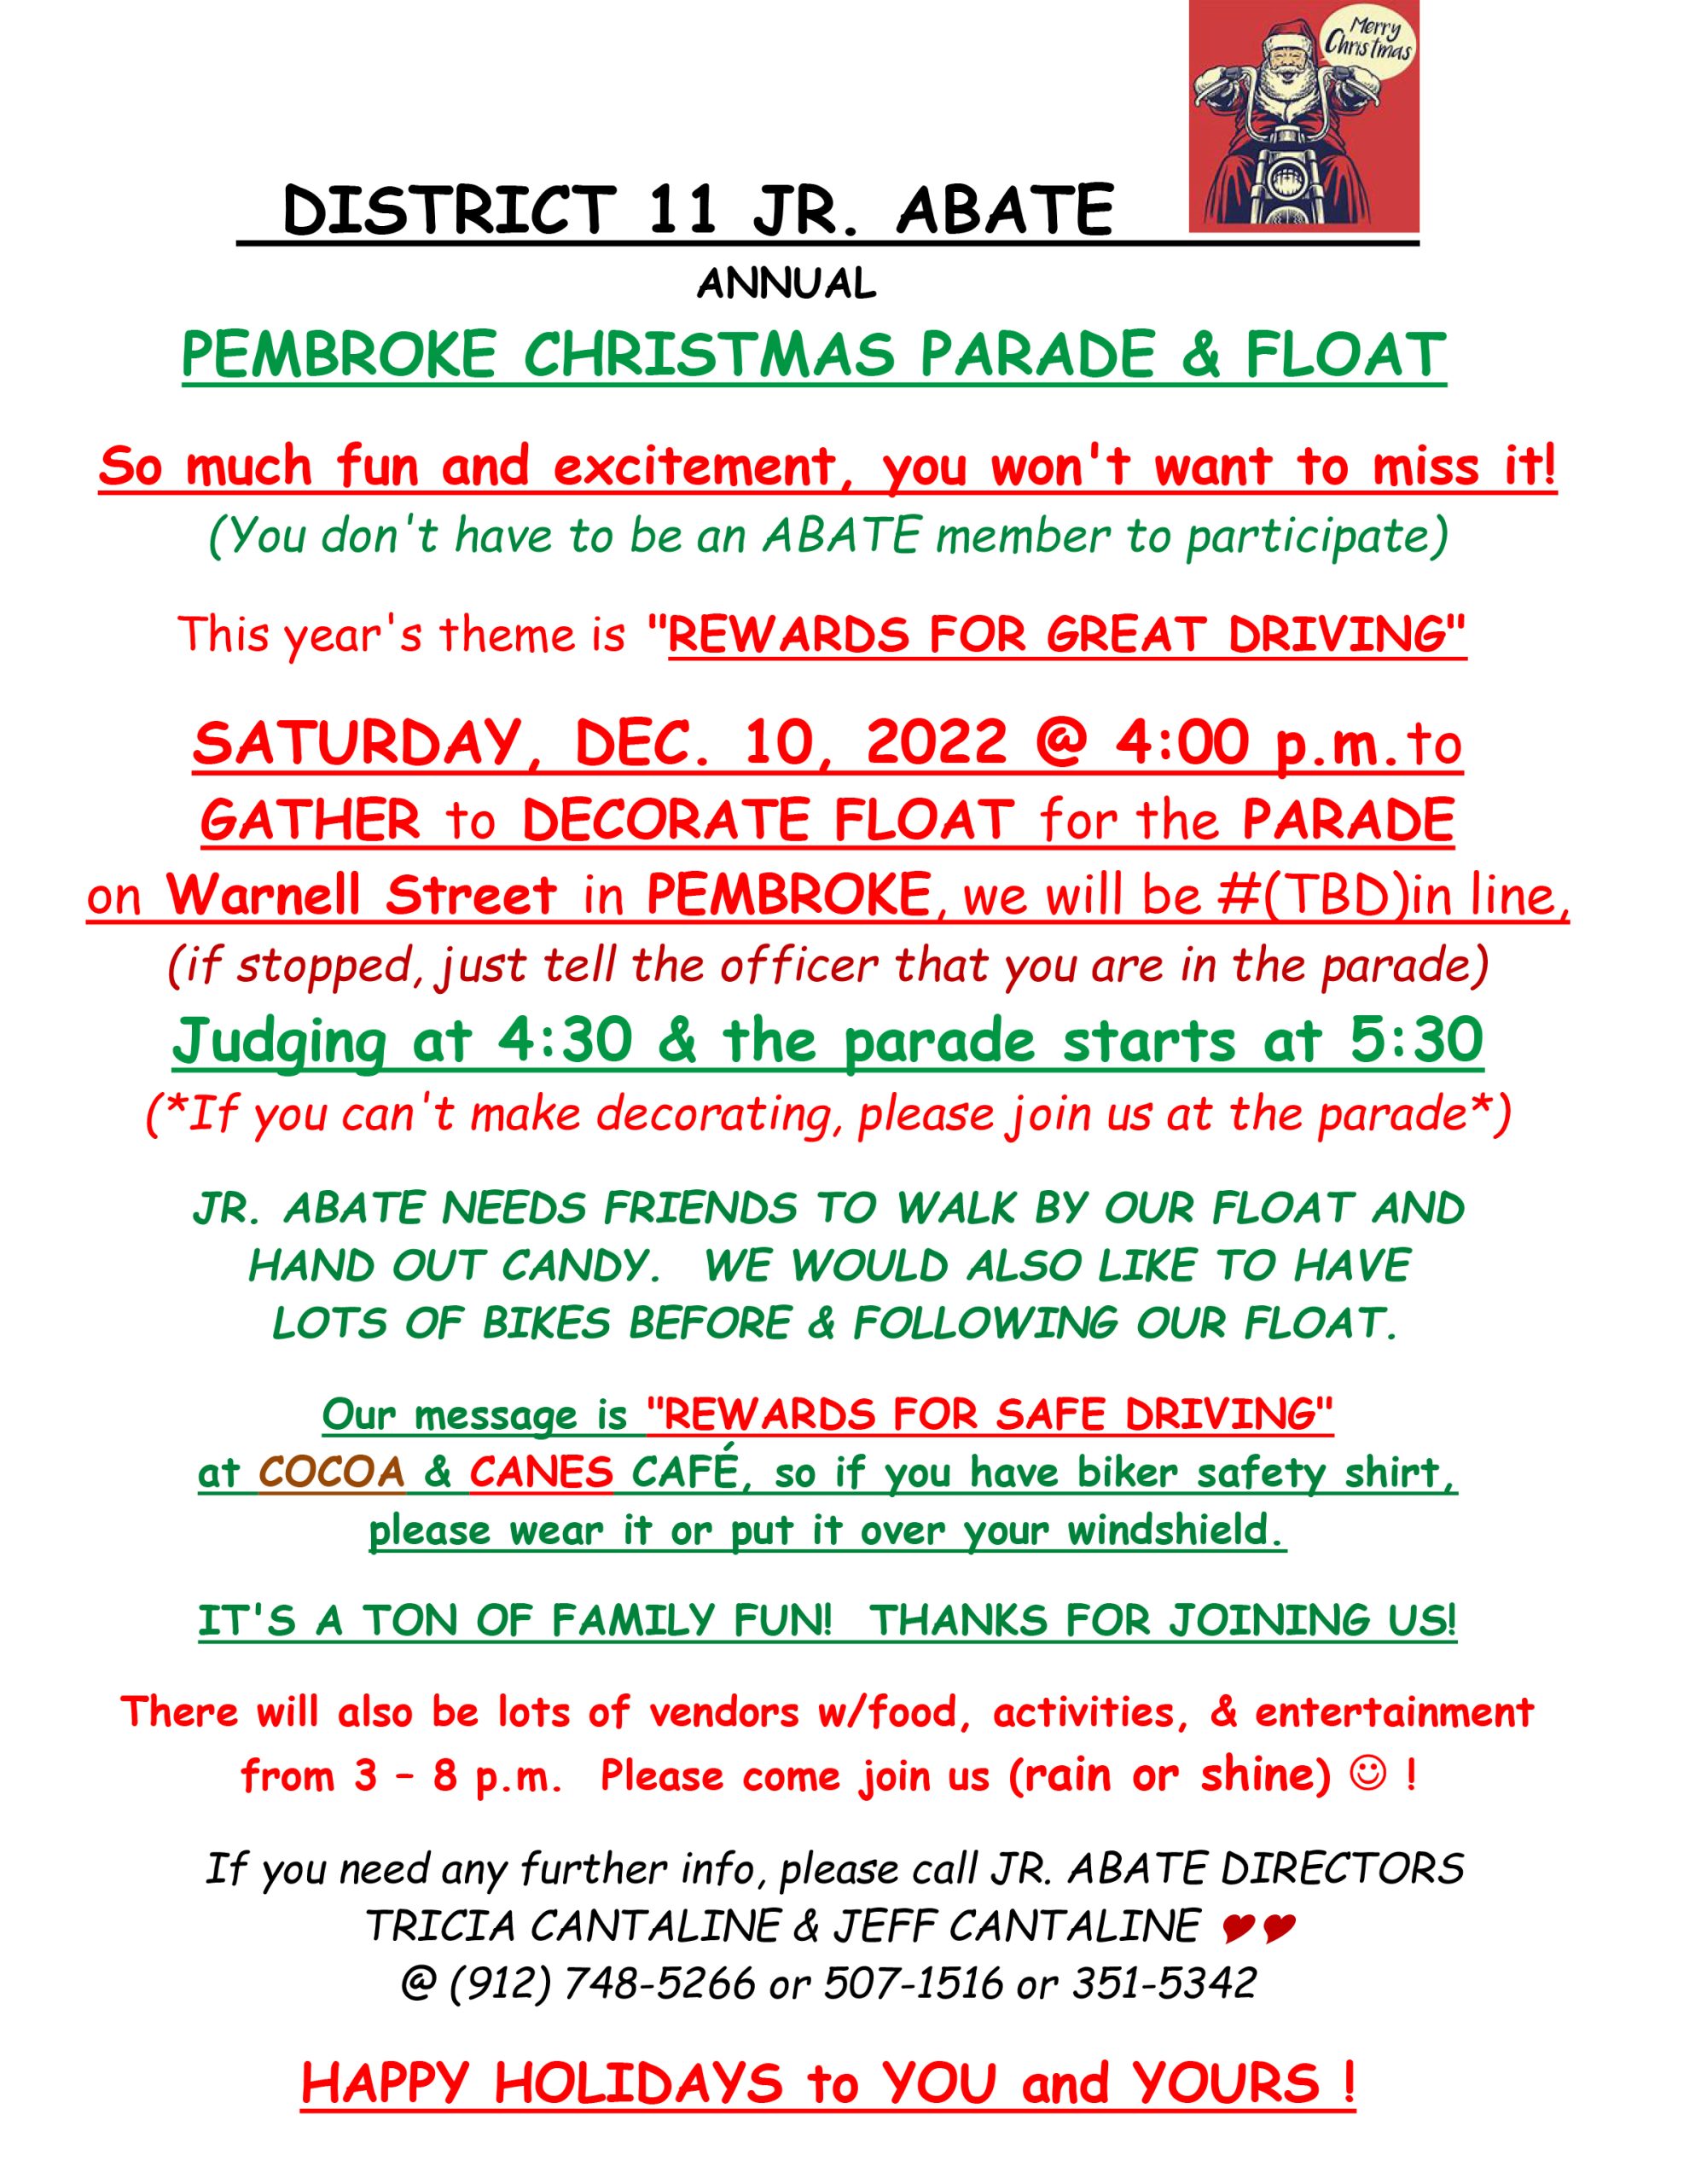 ABATE of GA District 11 Jr. ABATE - Pembroke Parade & Float @ Warnell Street, Pembroke, GA